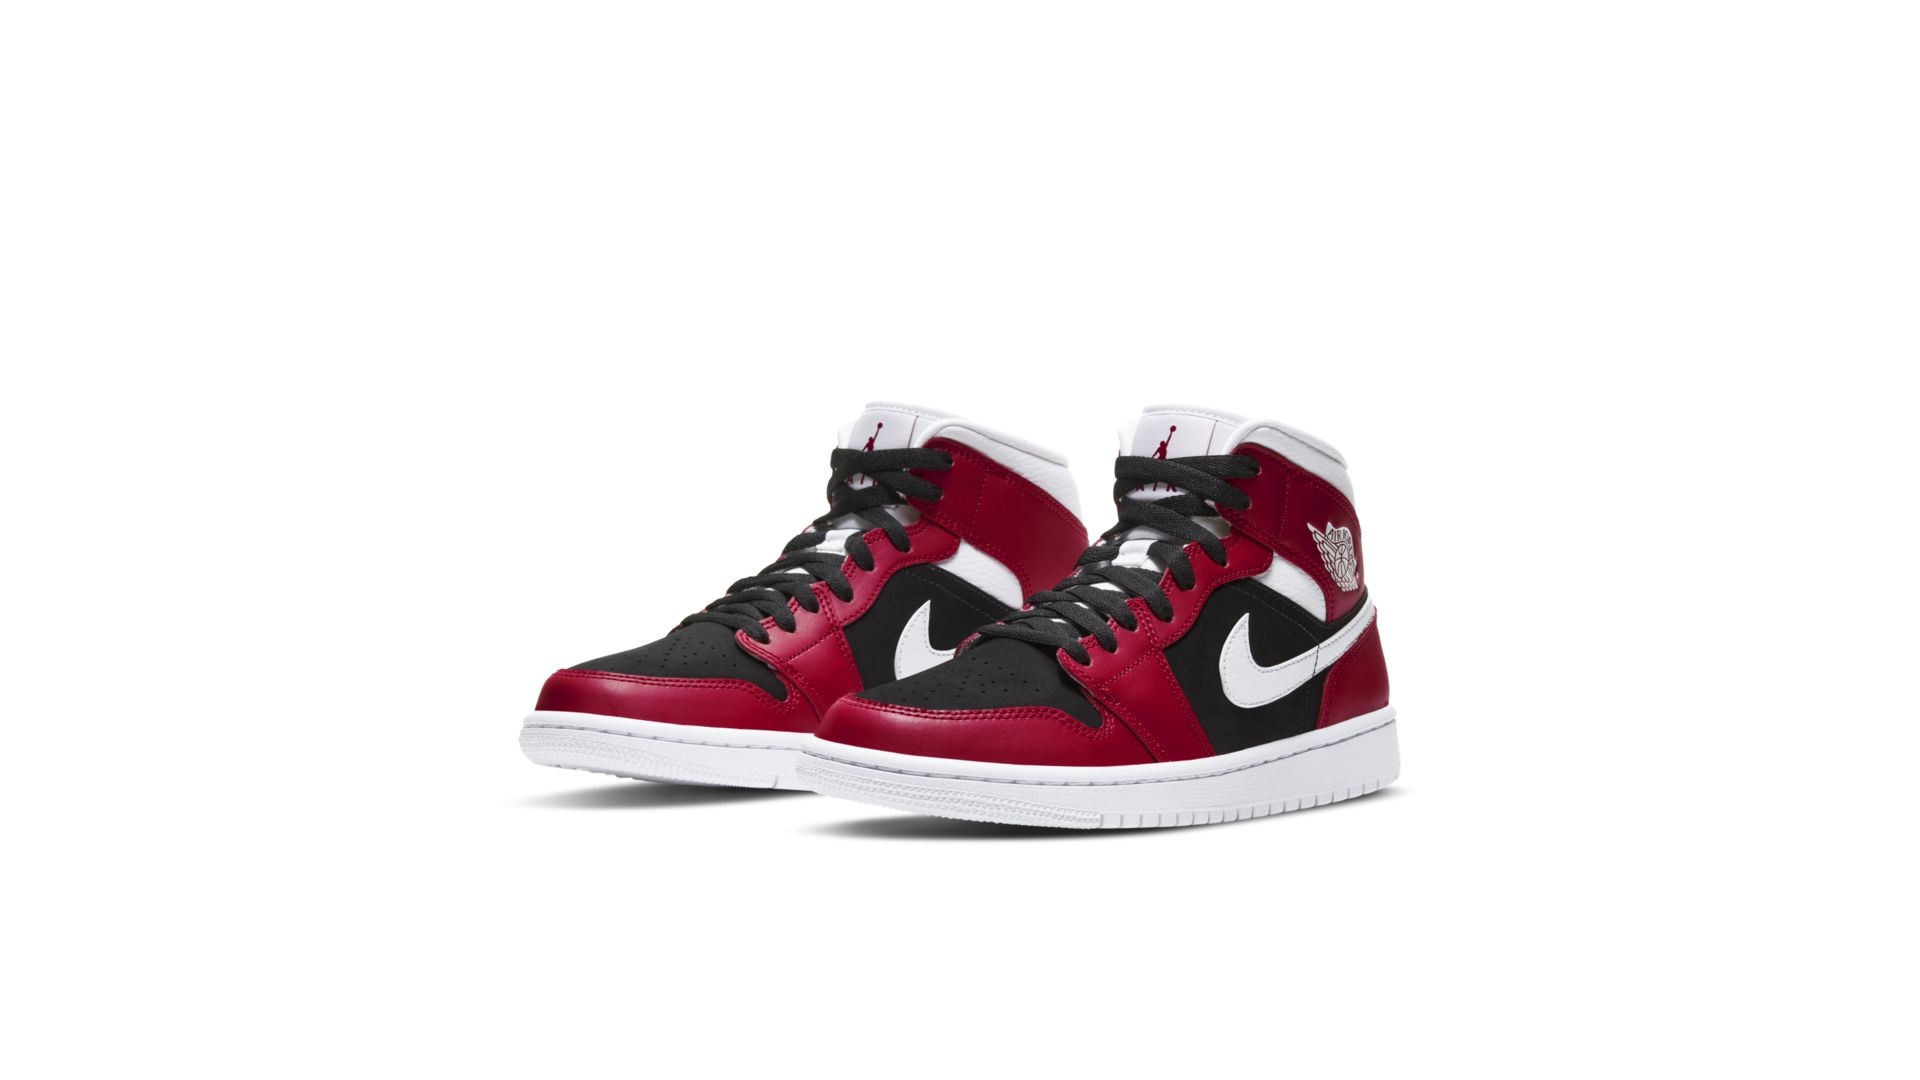 nike air jordan 1 mid red and black sneakers